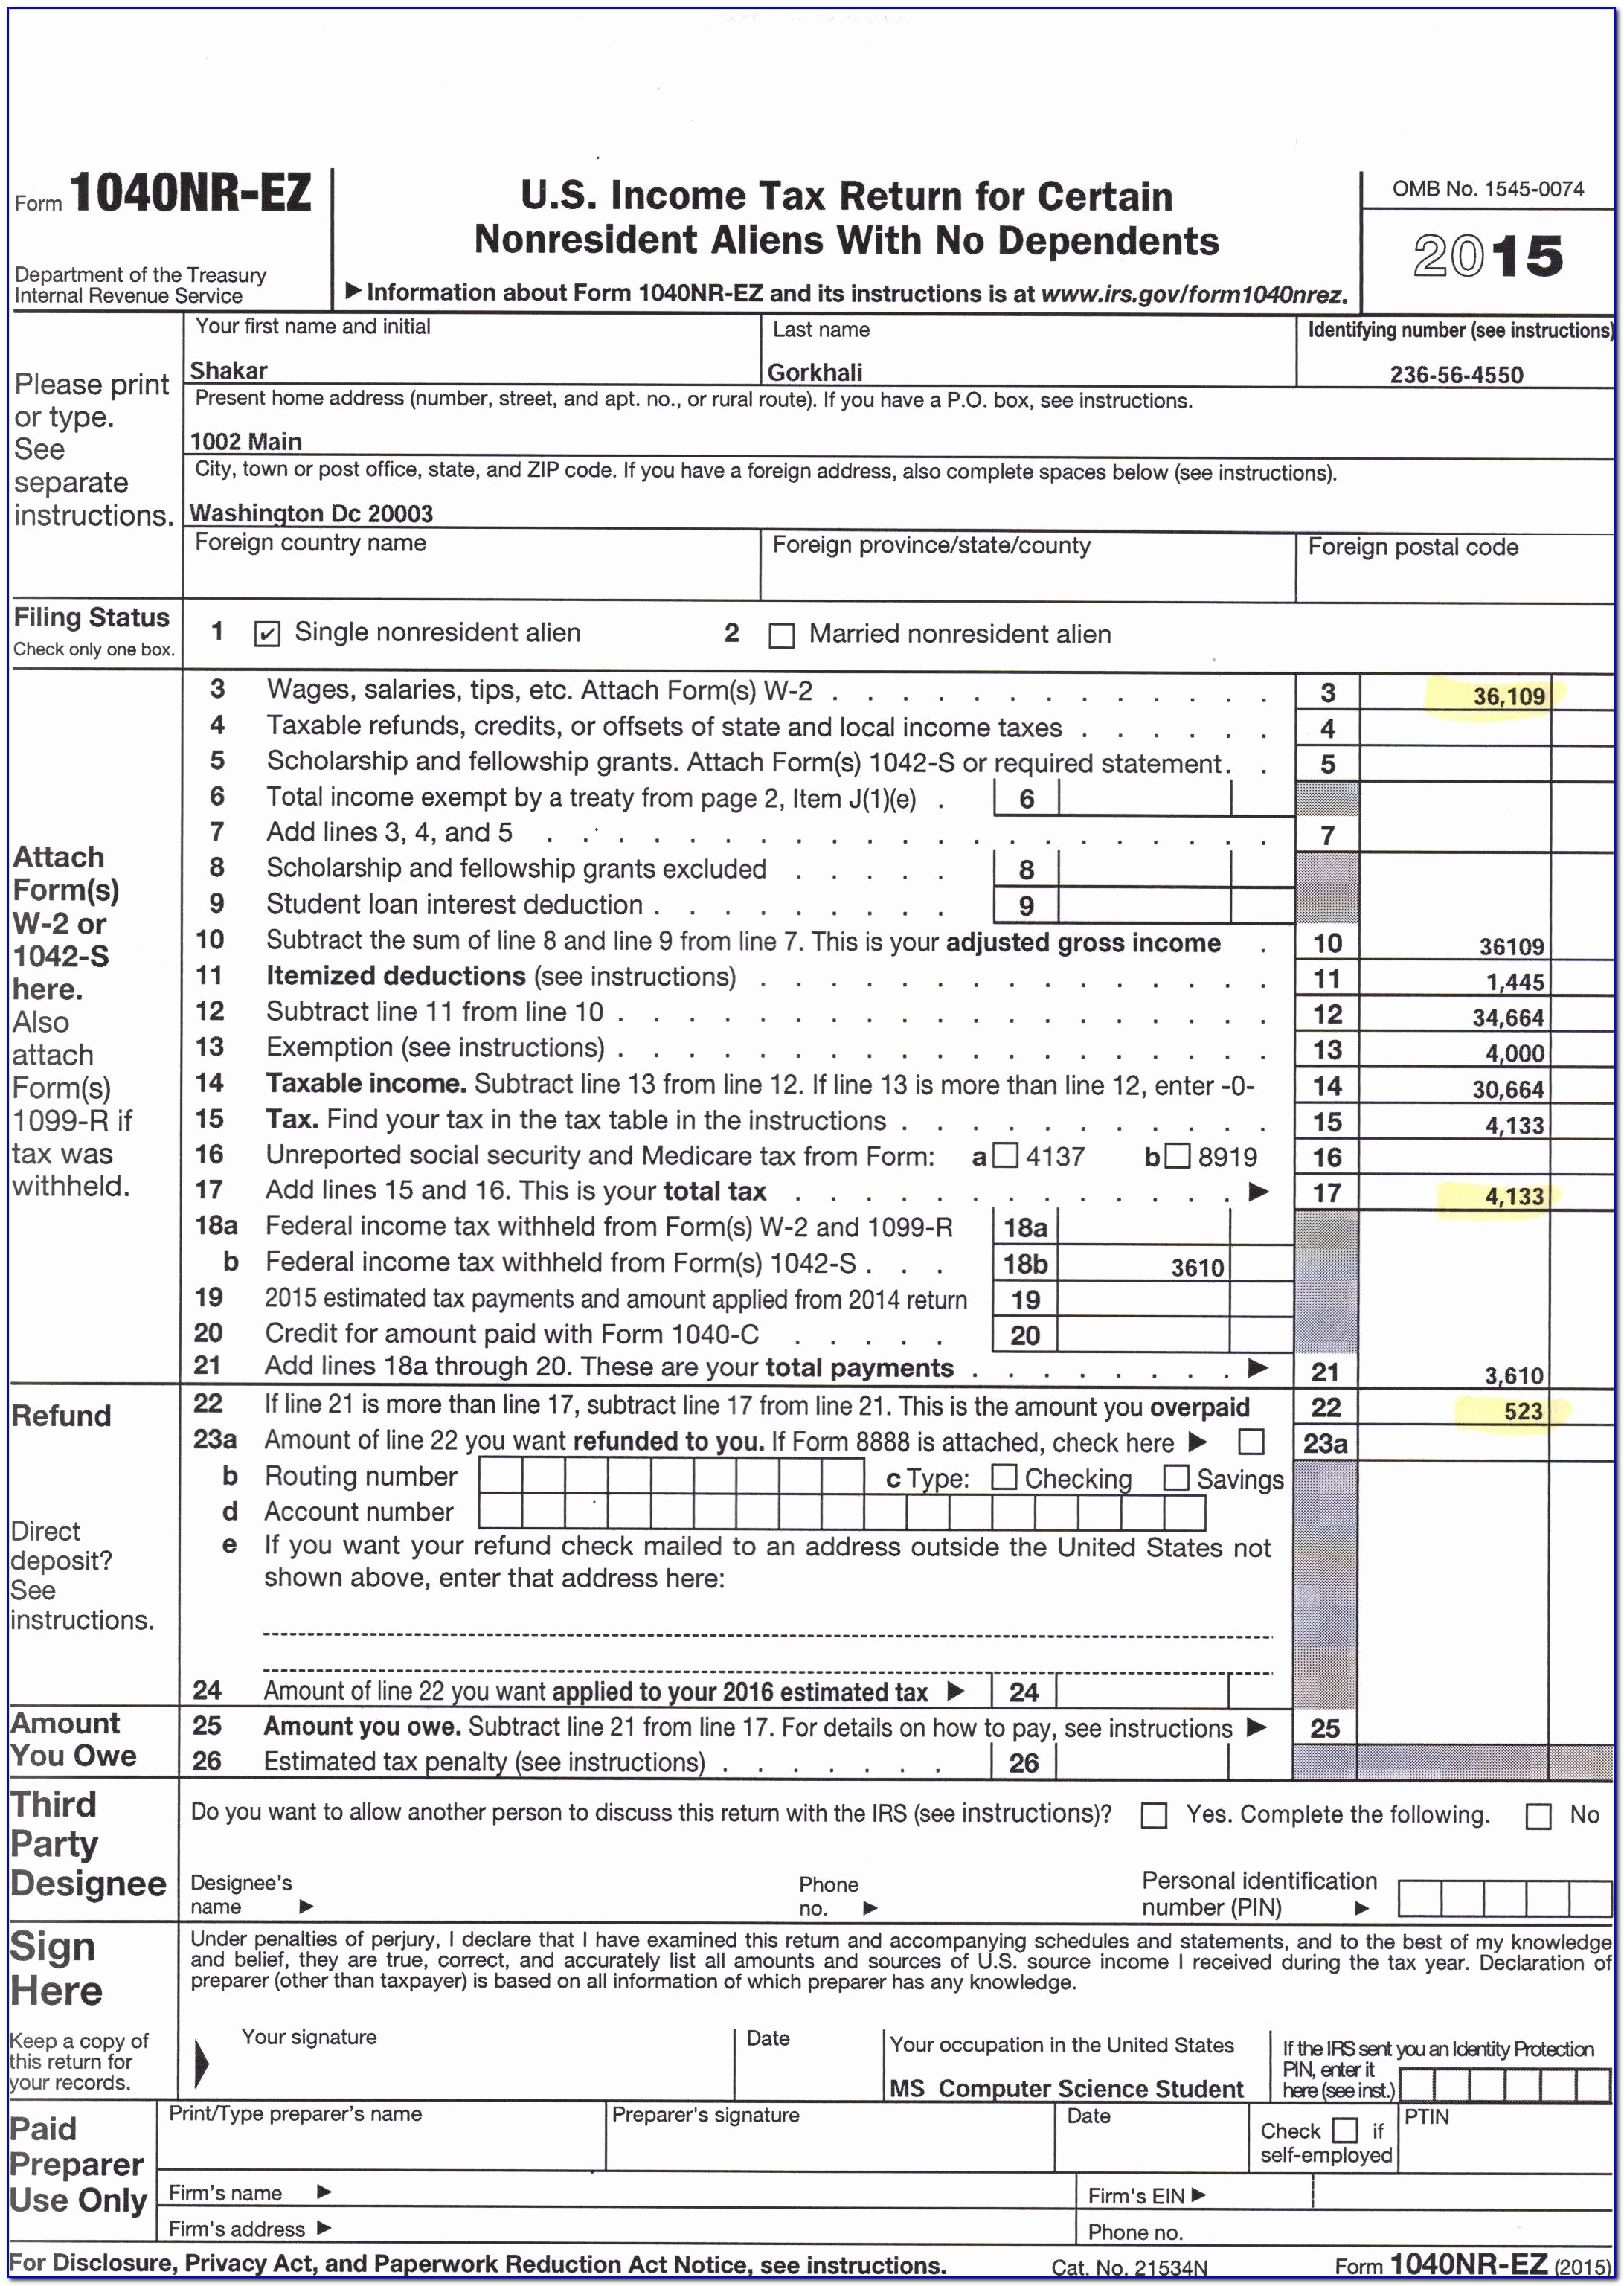 Irs Gov Form 1040 New Form 1040 Nr Ez U S In E Tax Return For Certai Vawebs